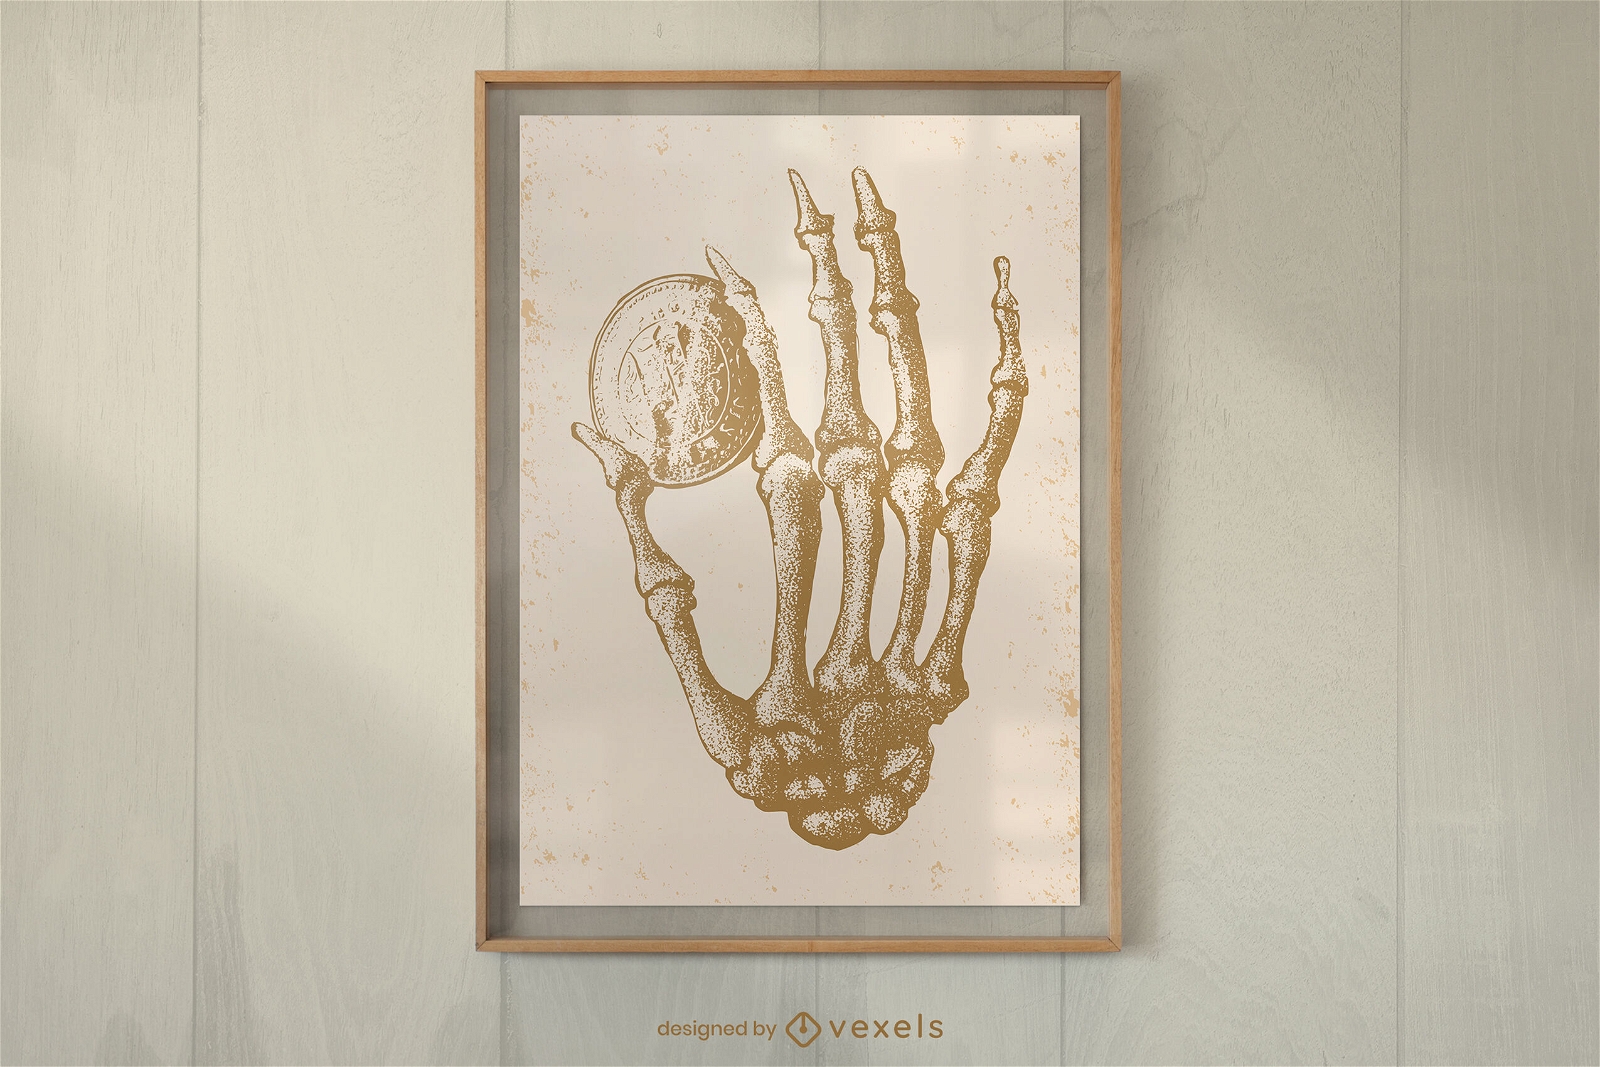 Skeleton hand holding a coin poster design